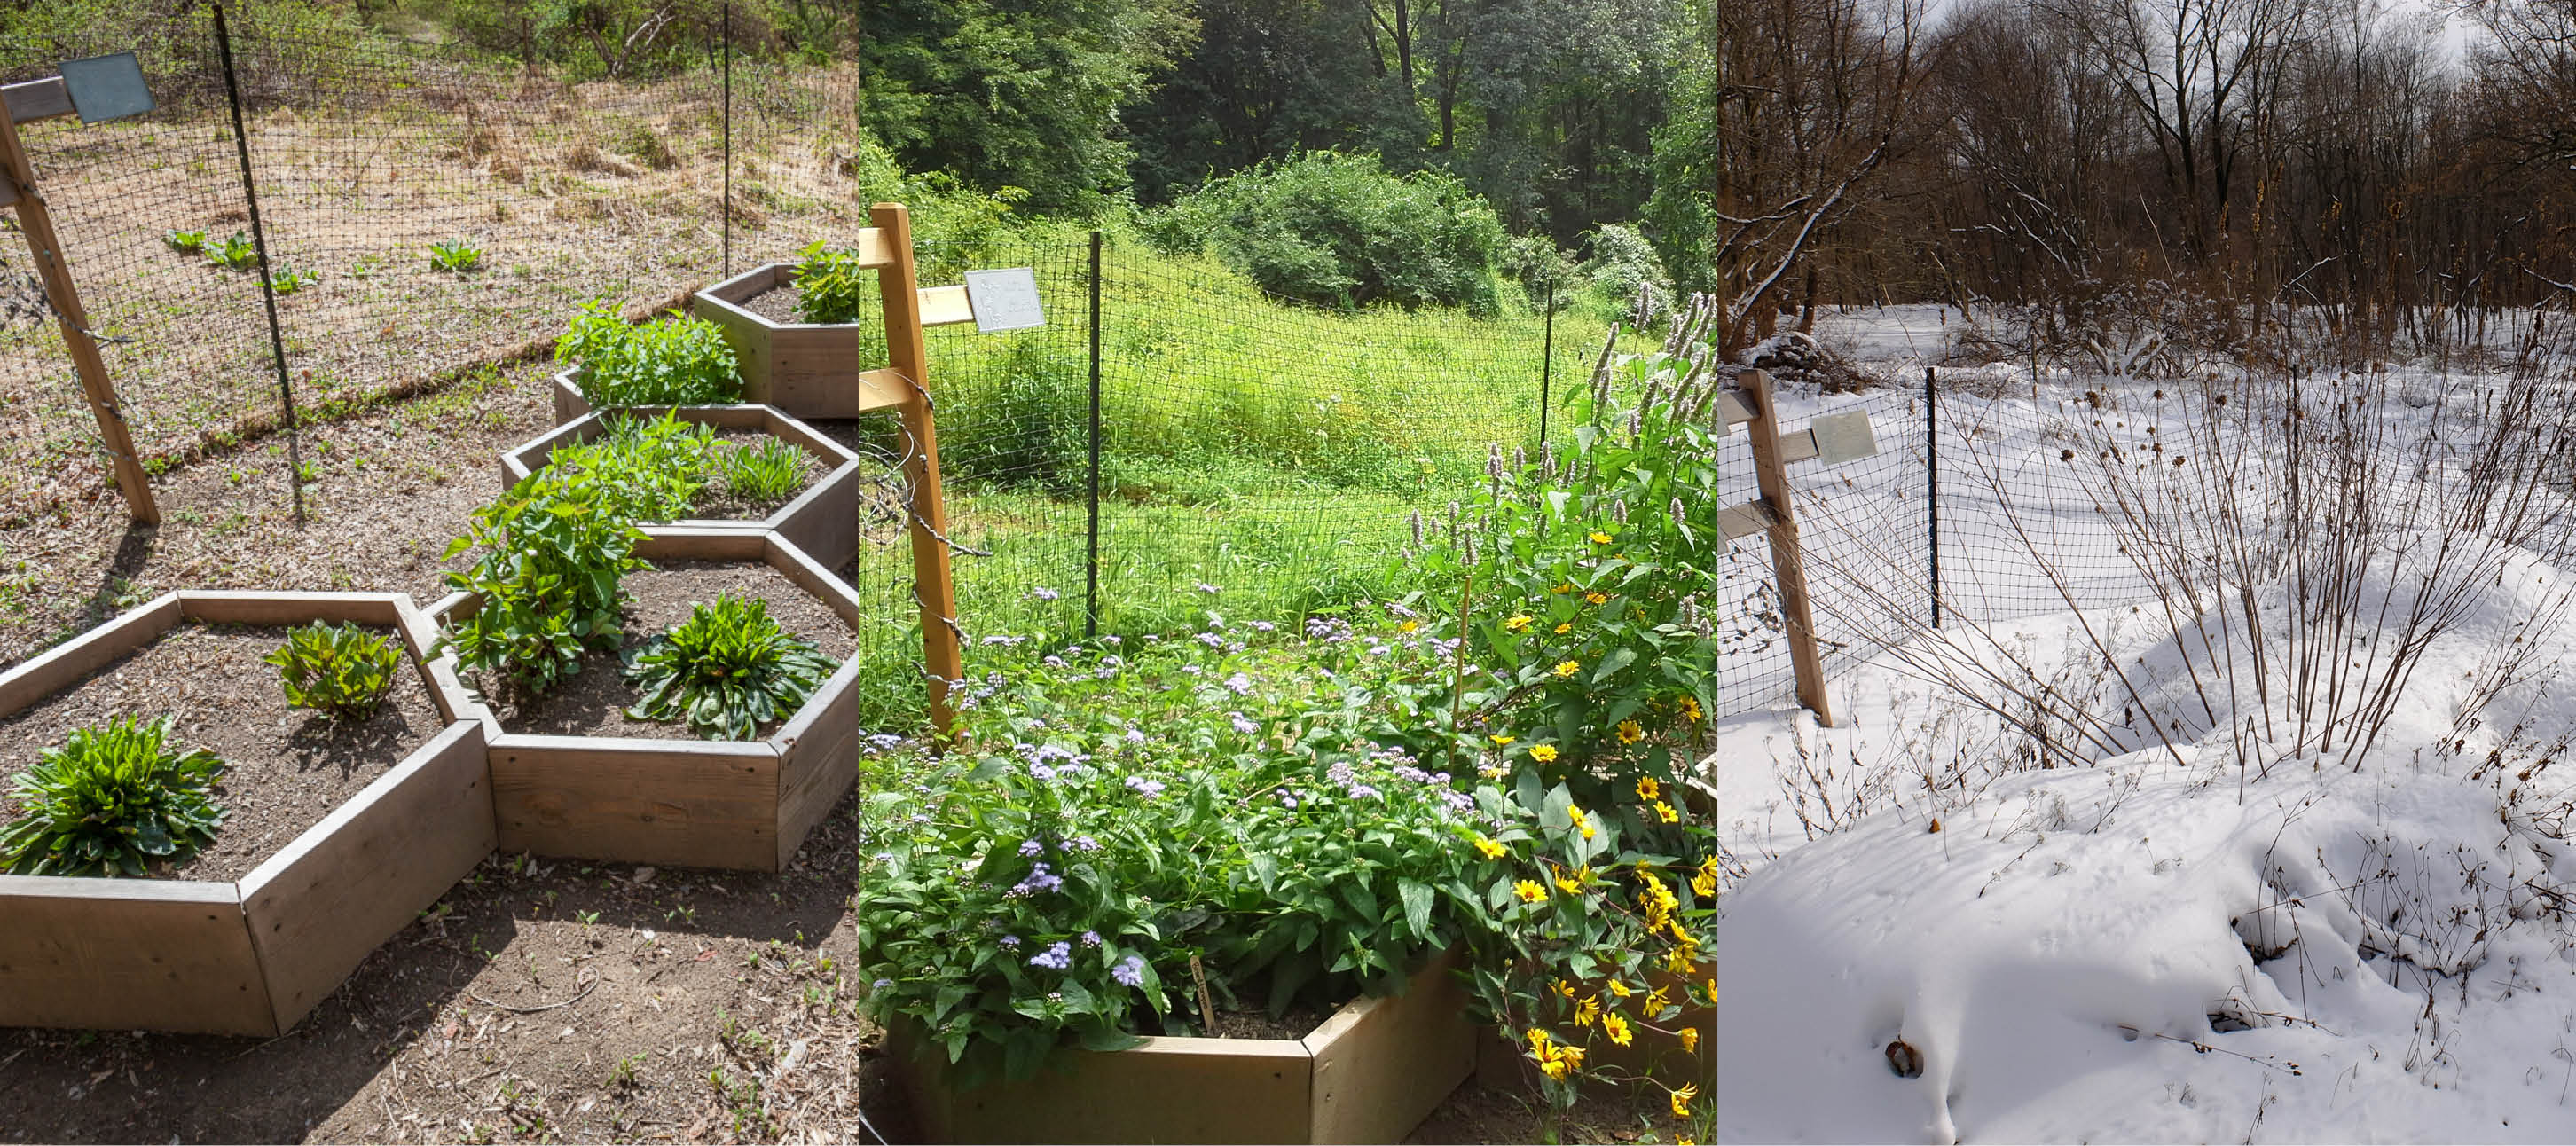 Native Pollinator Garden art installation changes over time